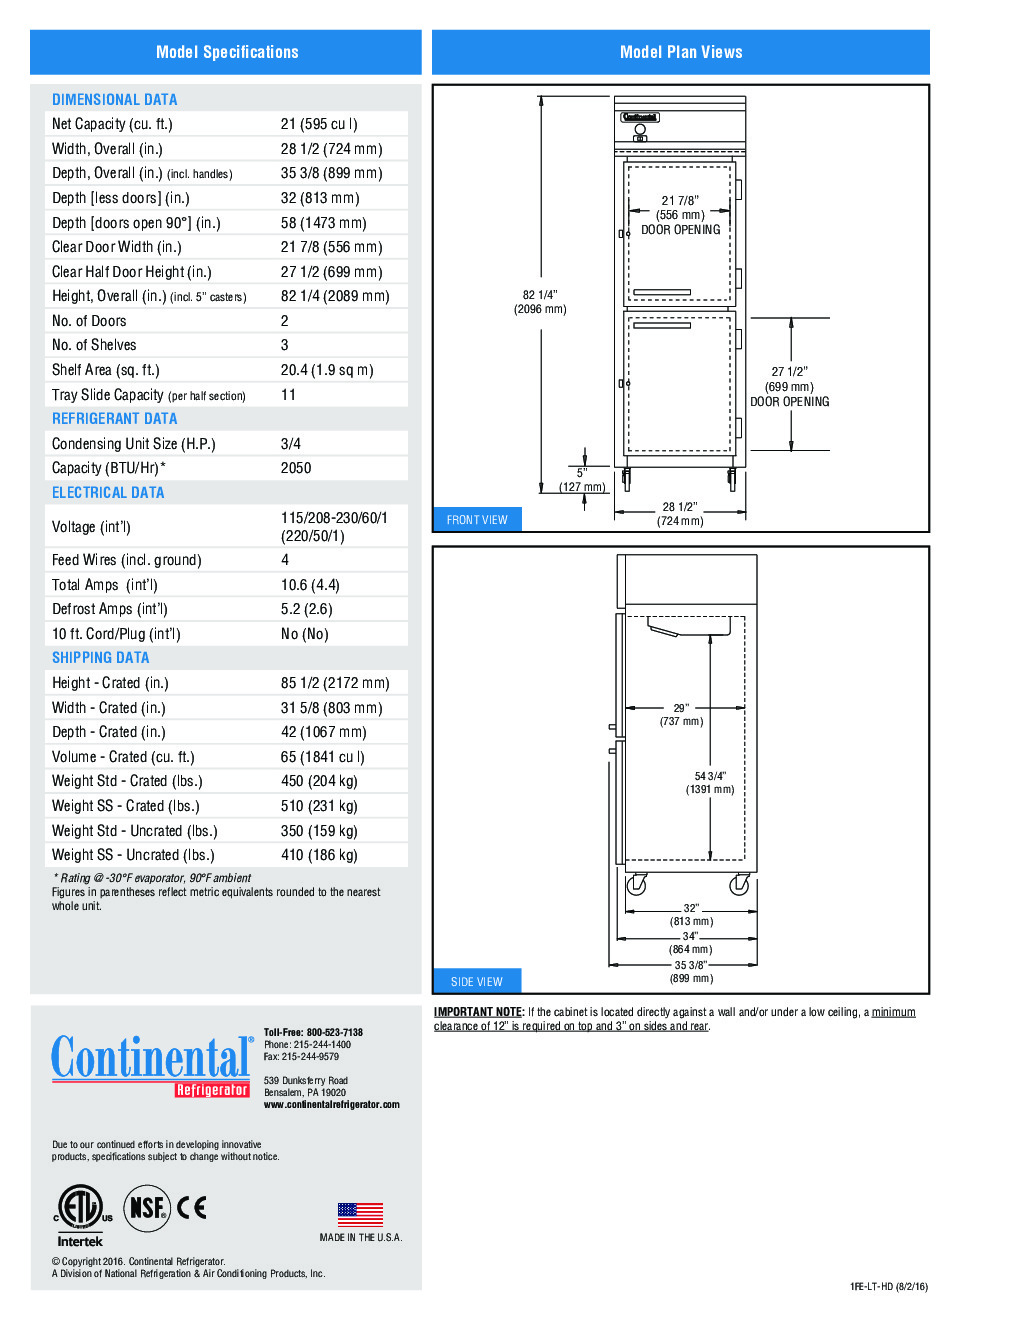 Continental Refrigerator 1FE-LT-HD Reach-In Low Temperature Freezer